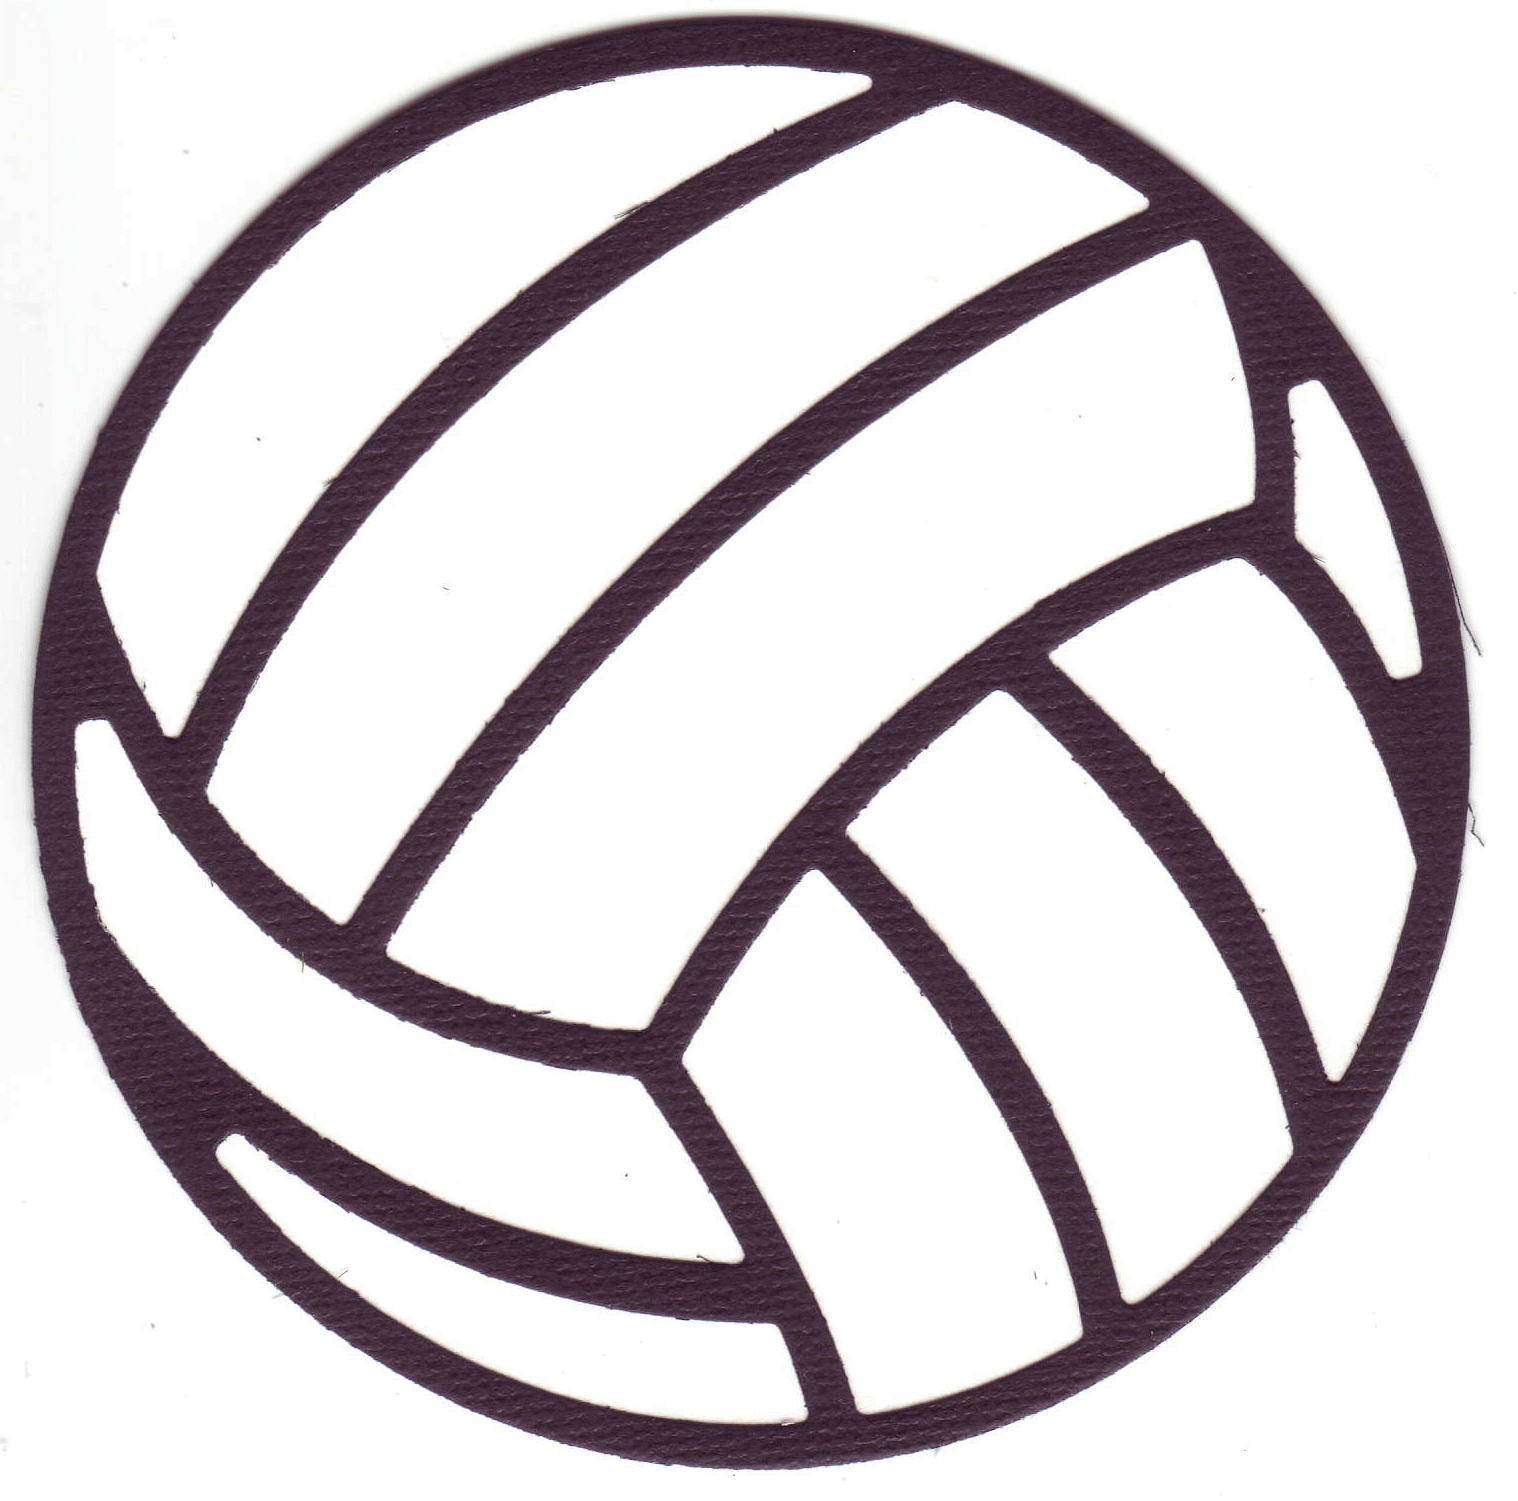 Volleyball ball clipart